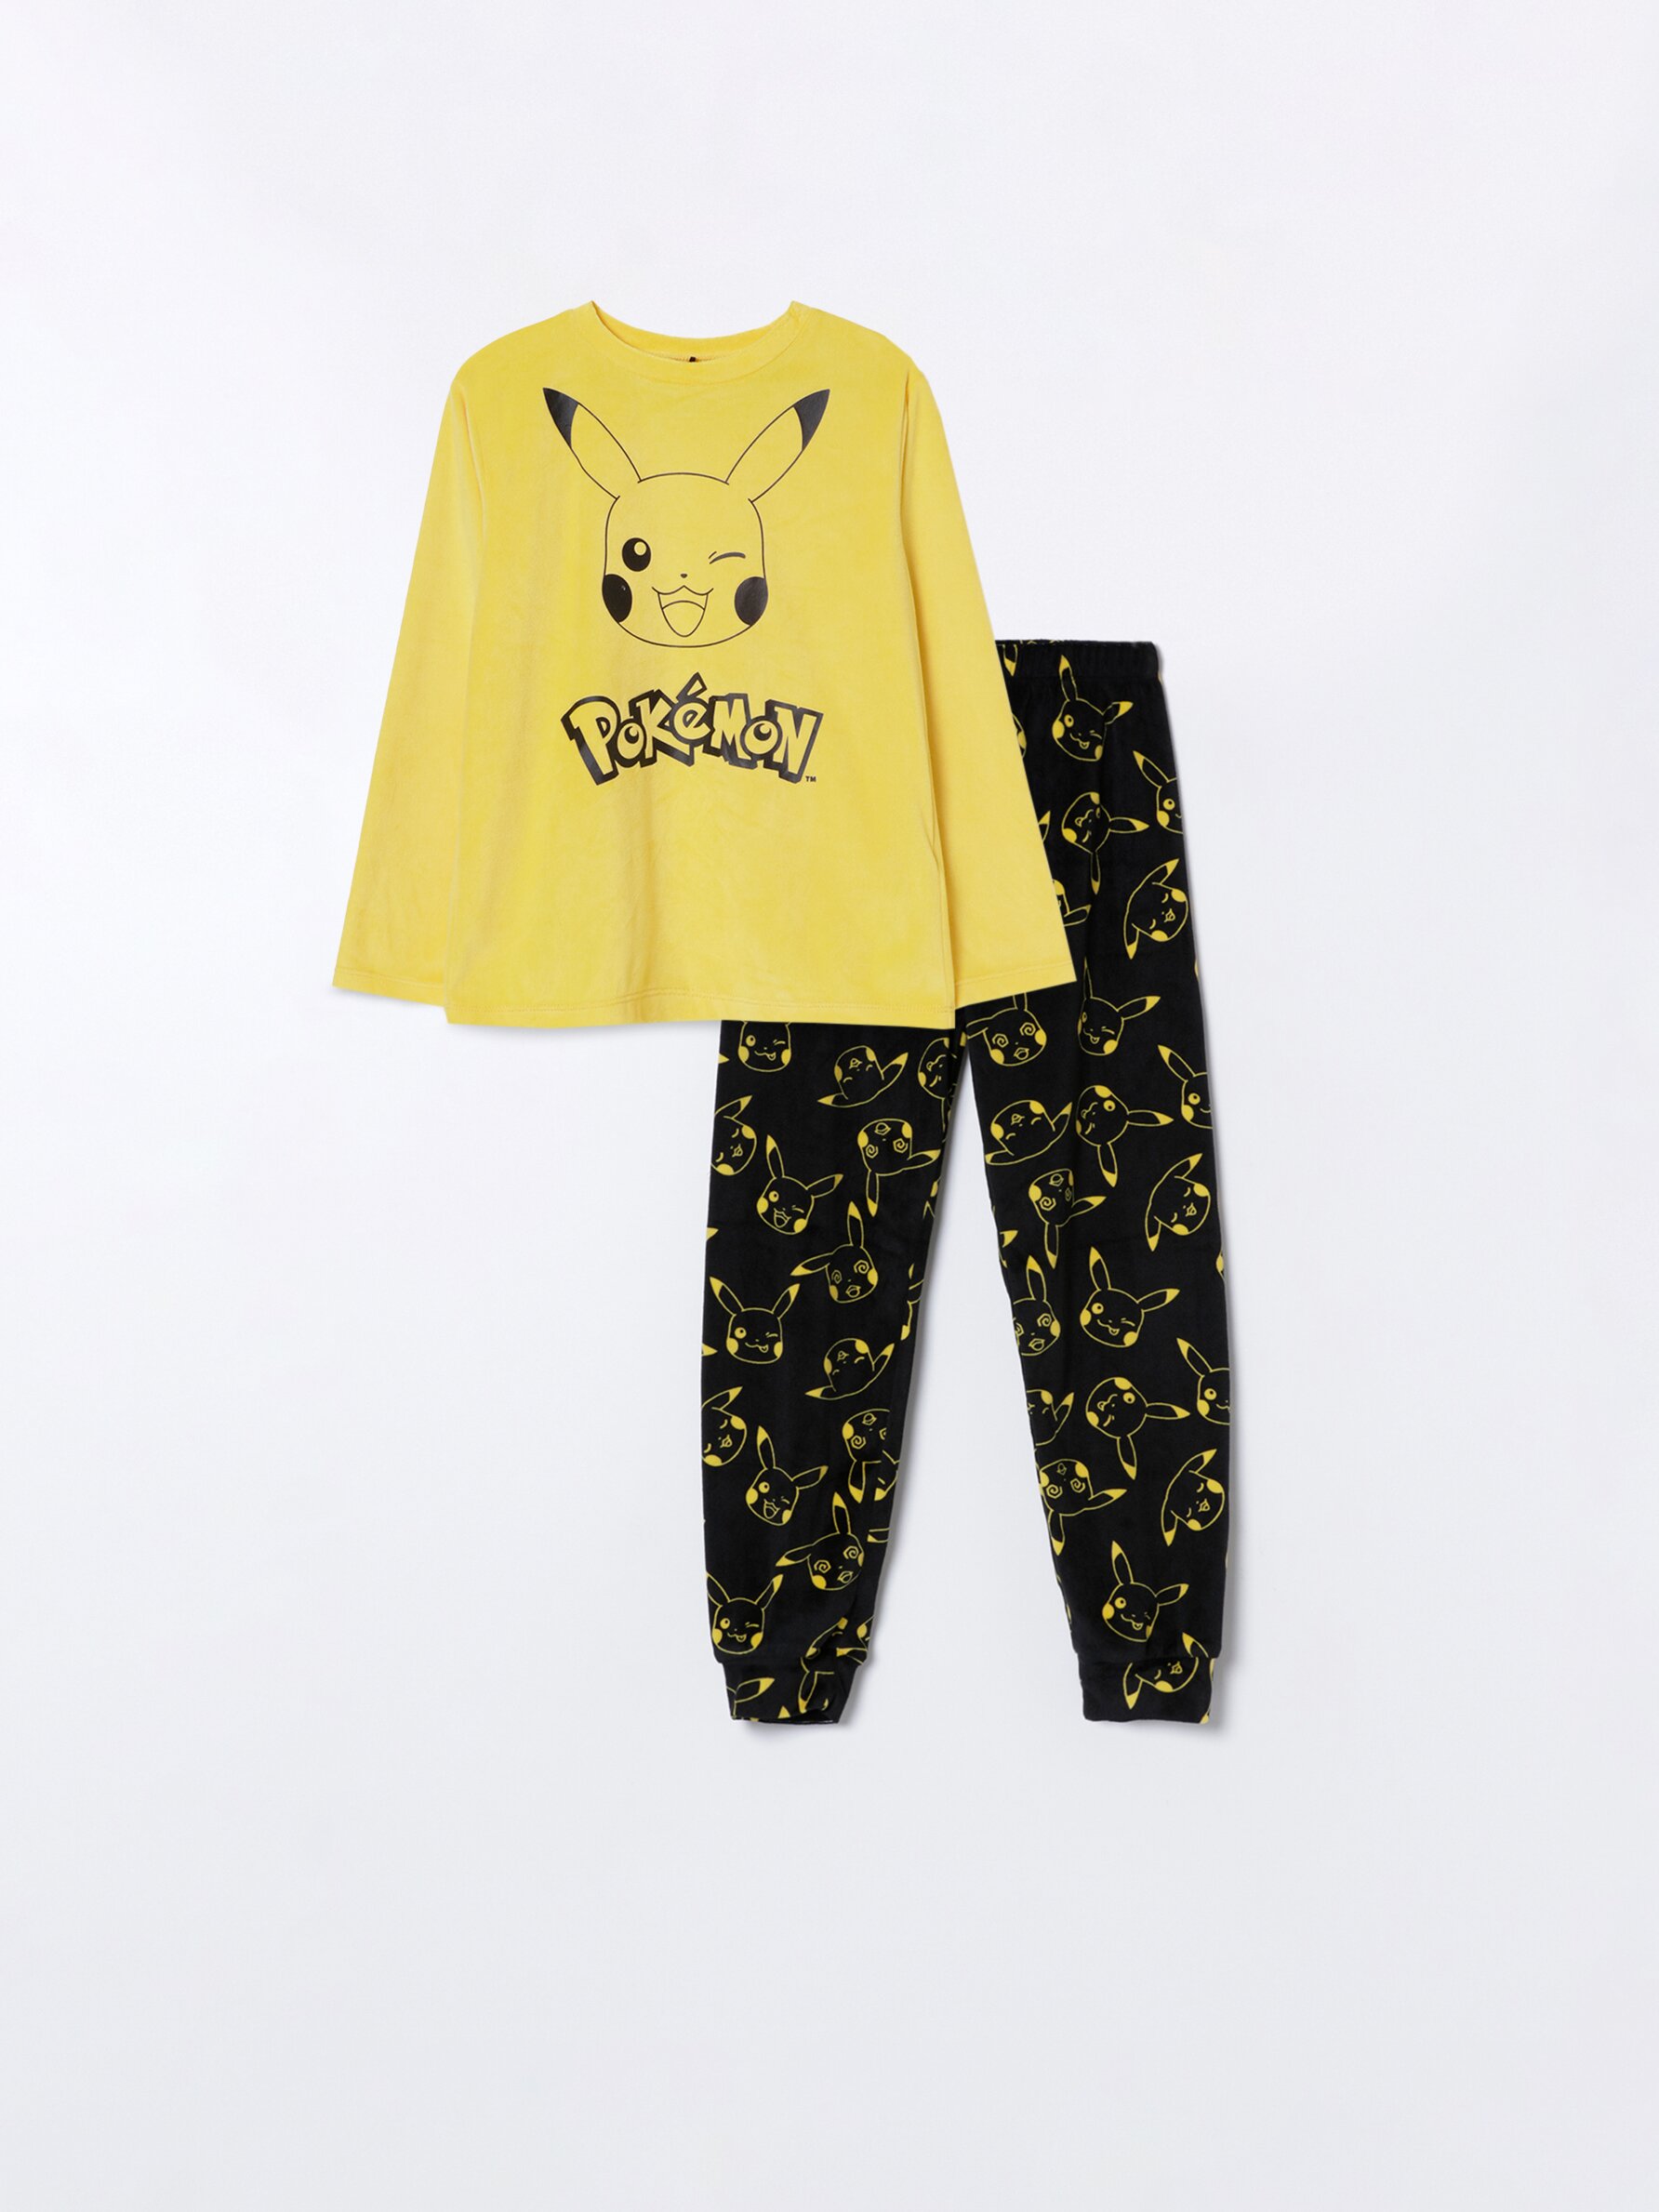 Velvety Pikachu Pokémon™ pyjama set - Cartoons - COLLABS - CLOTHING - BOY 4- 14 years KIDS - | Lefties Bahrain